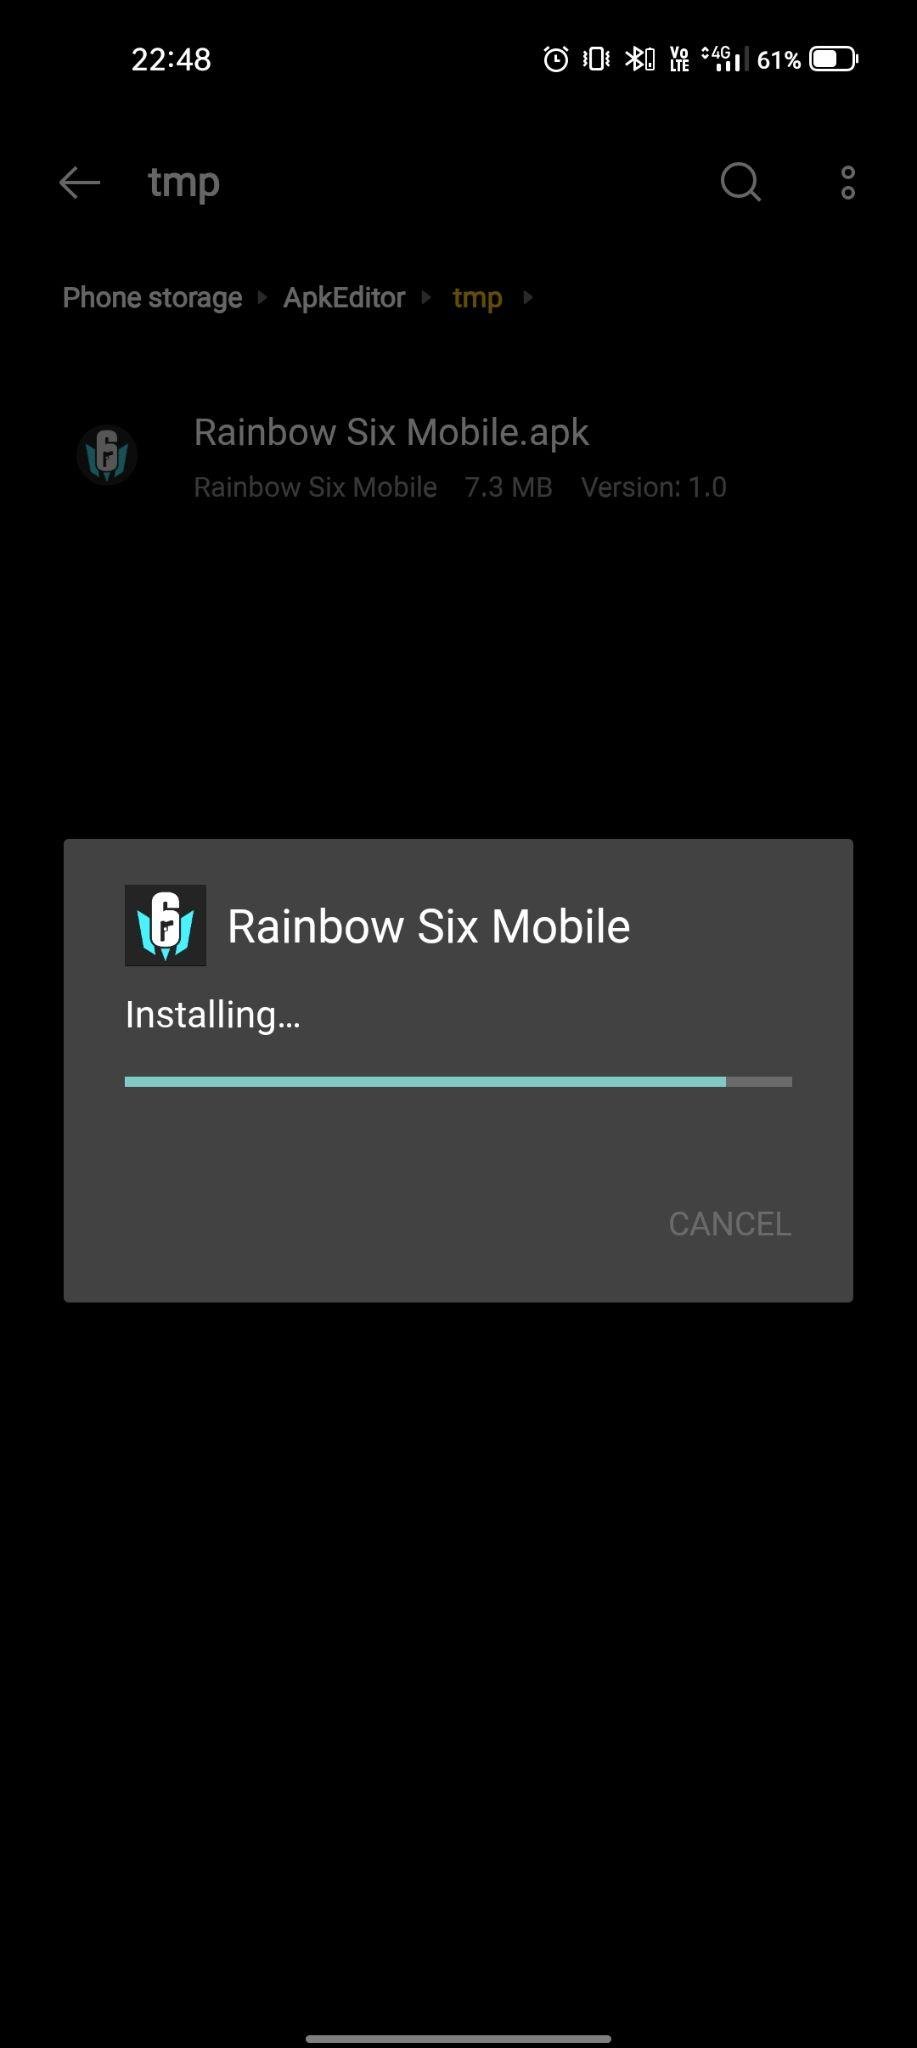 rainbox six mobile apk installing